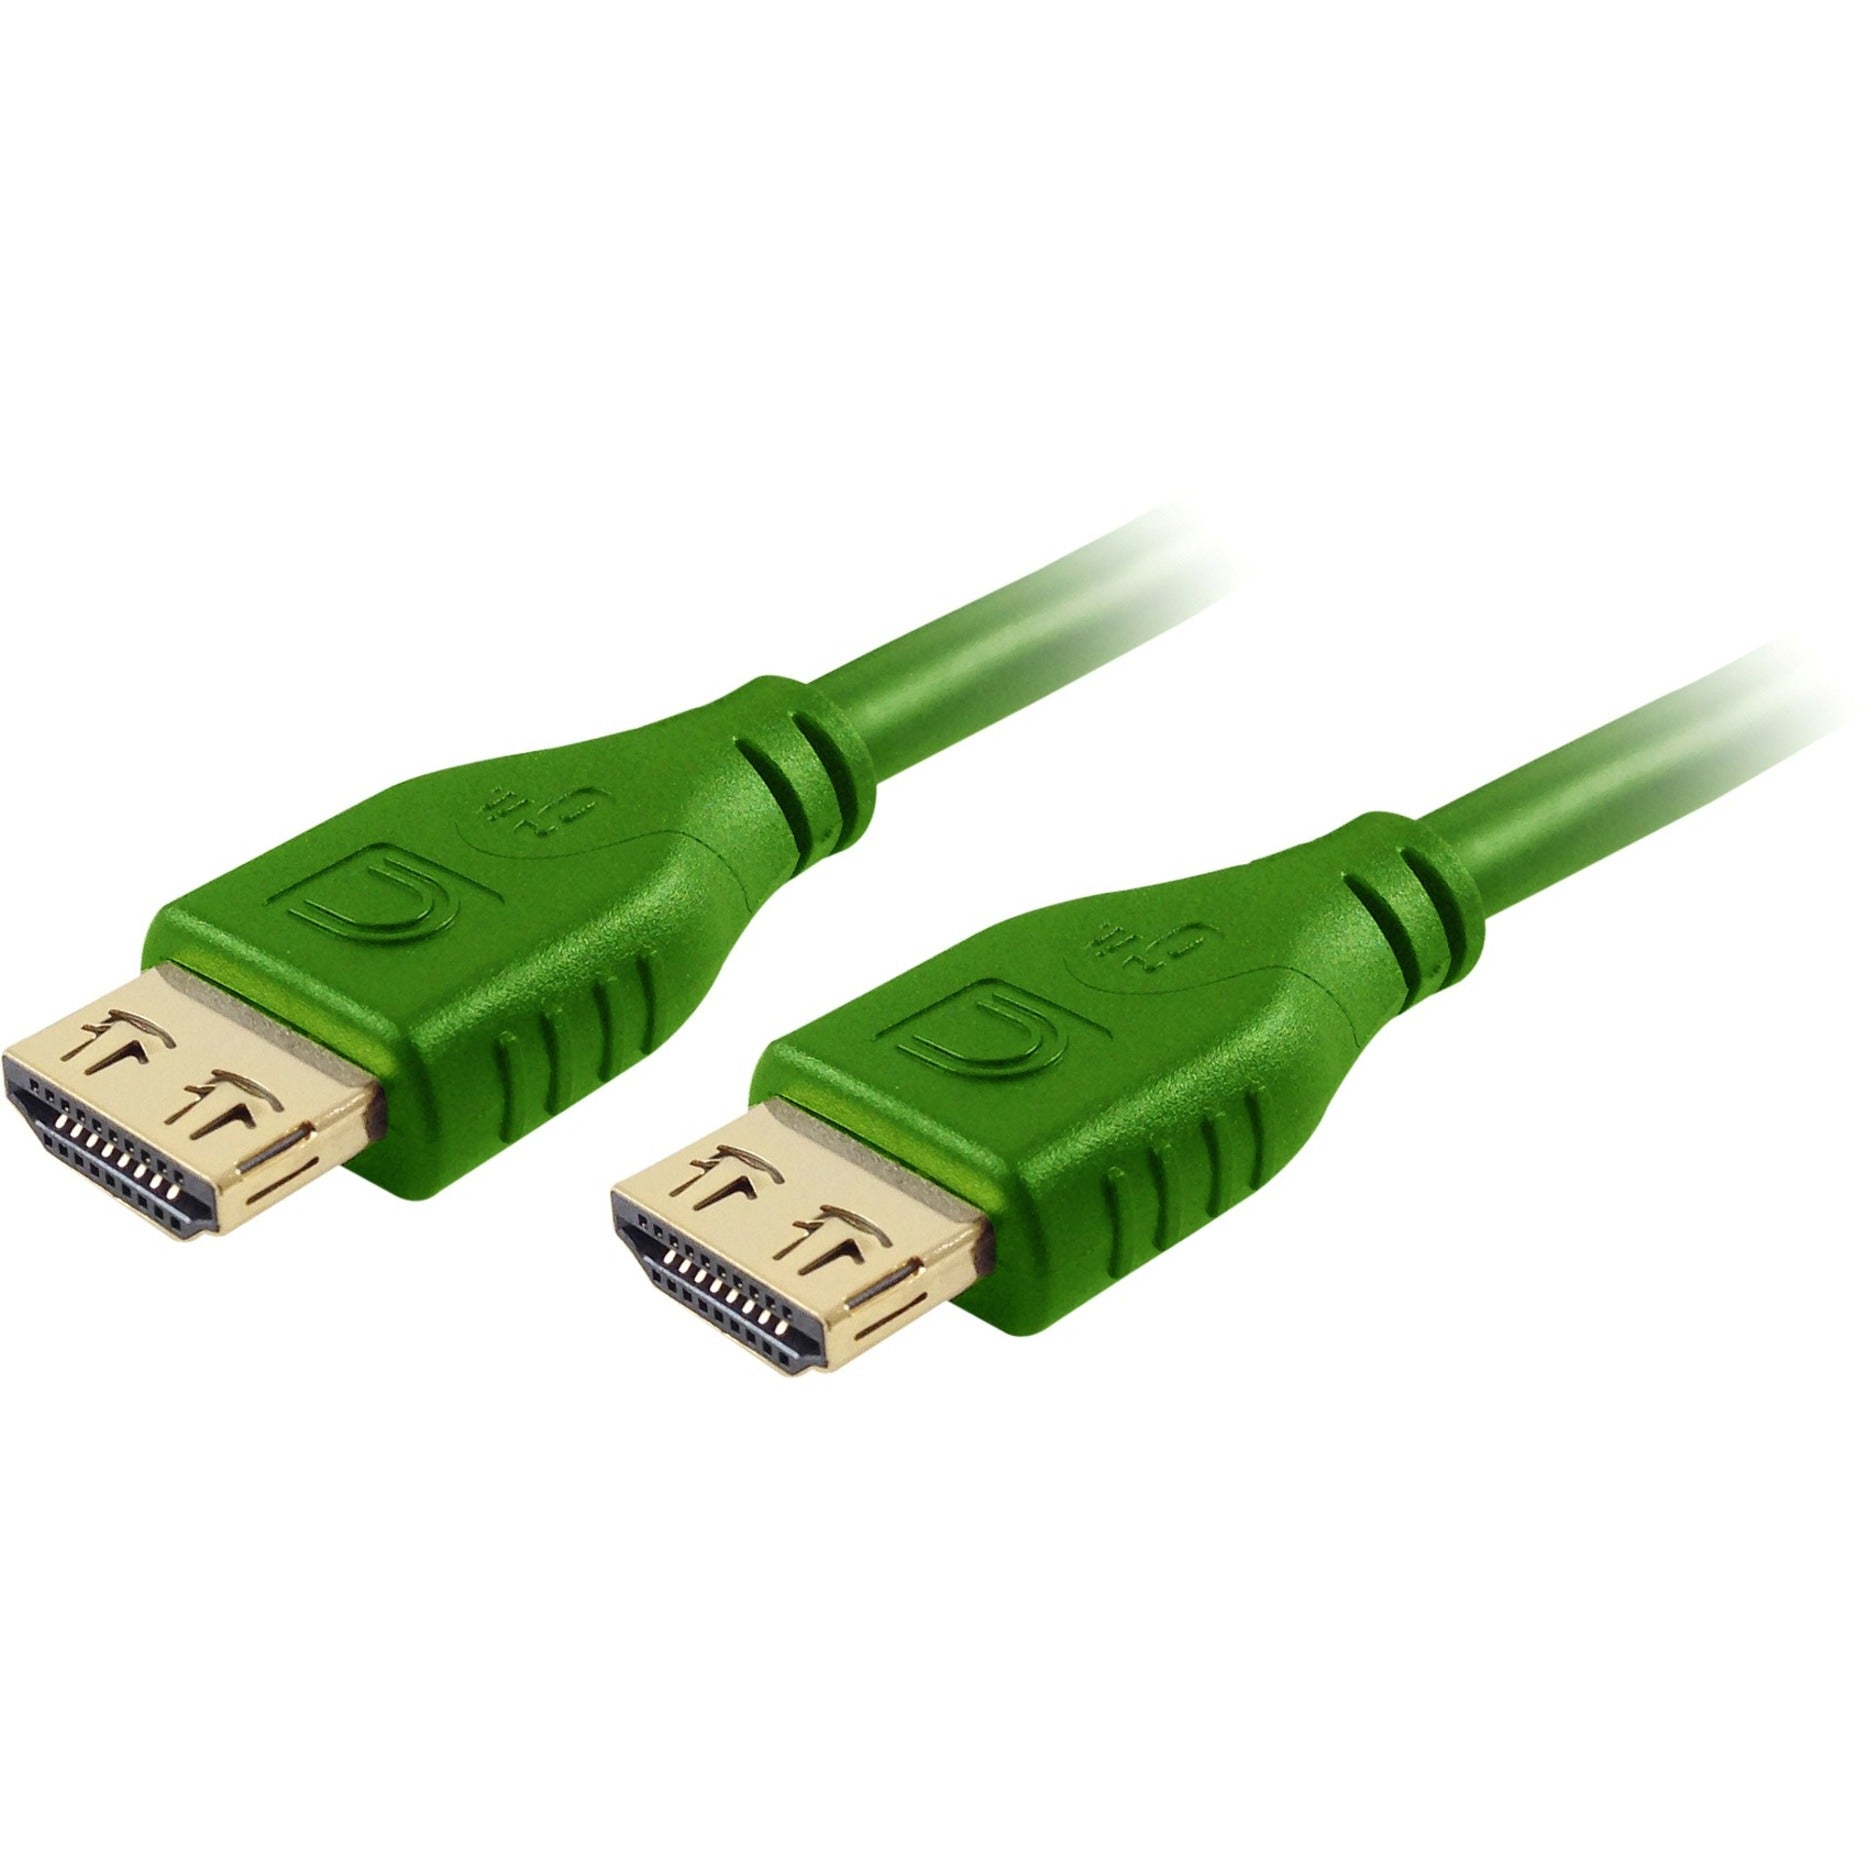 Comprehensive MHD-MHD-12PROGRN MicroFlex Pro AV/IT Series HDMI Cable, 12ft, Lifetime Warranty, Dark Green